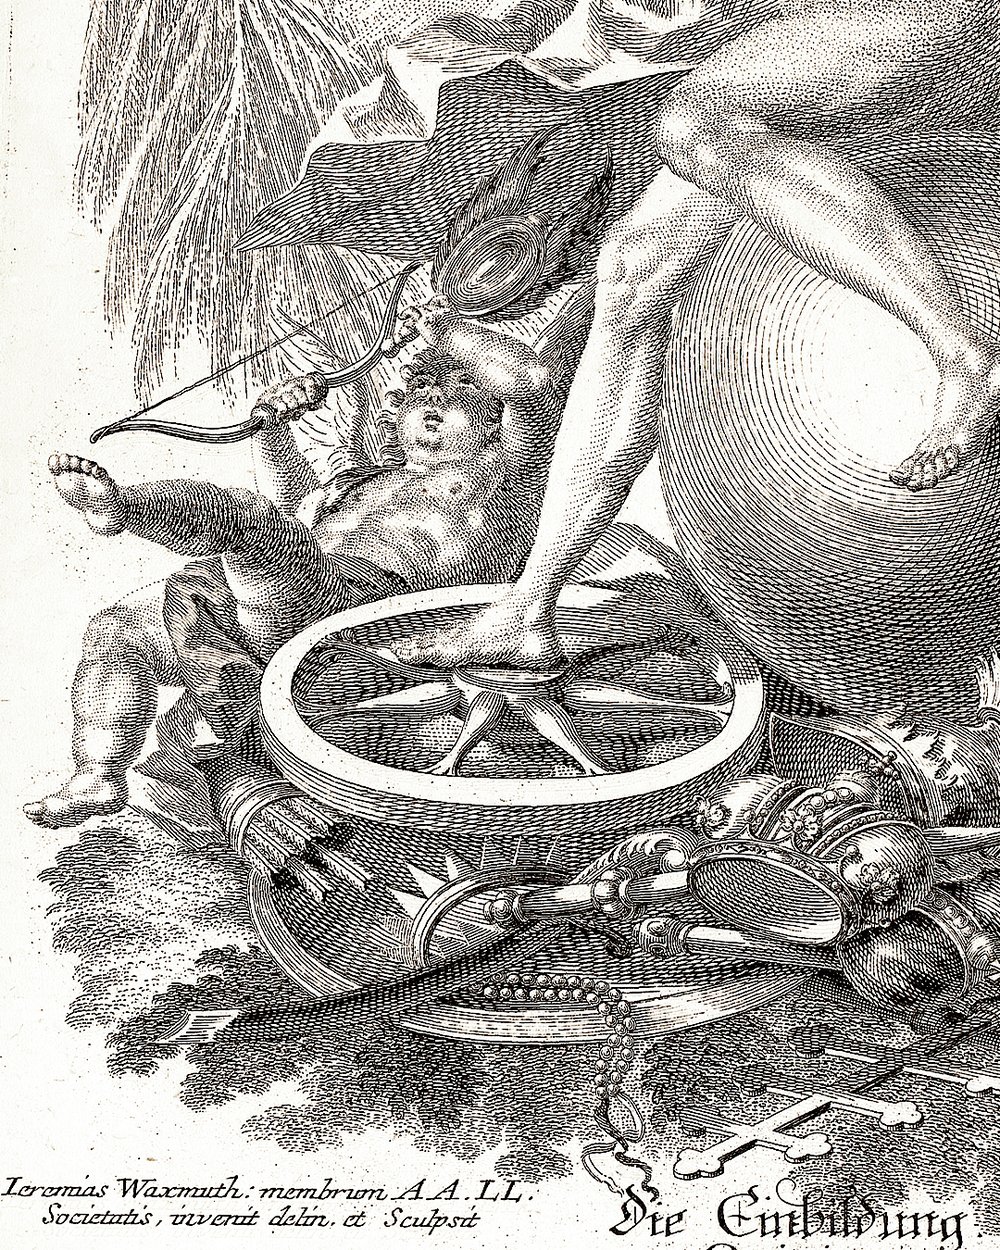 ''Allegory of false belief'' (1721 - 1771)